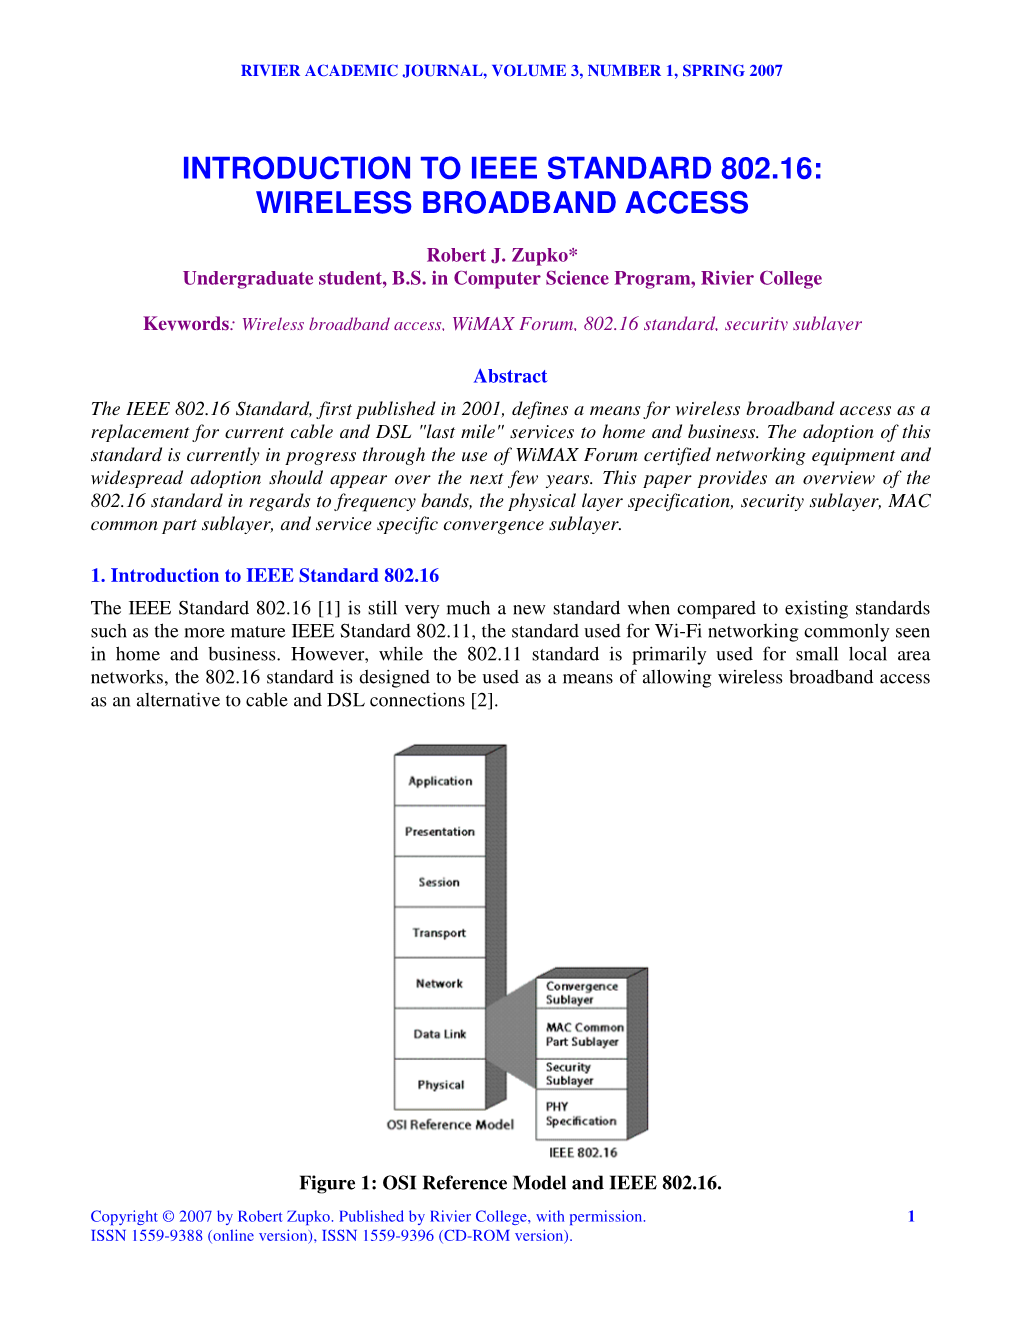 Introduction to Ieee Standard 802.16: Wireless Broadband Access